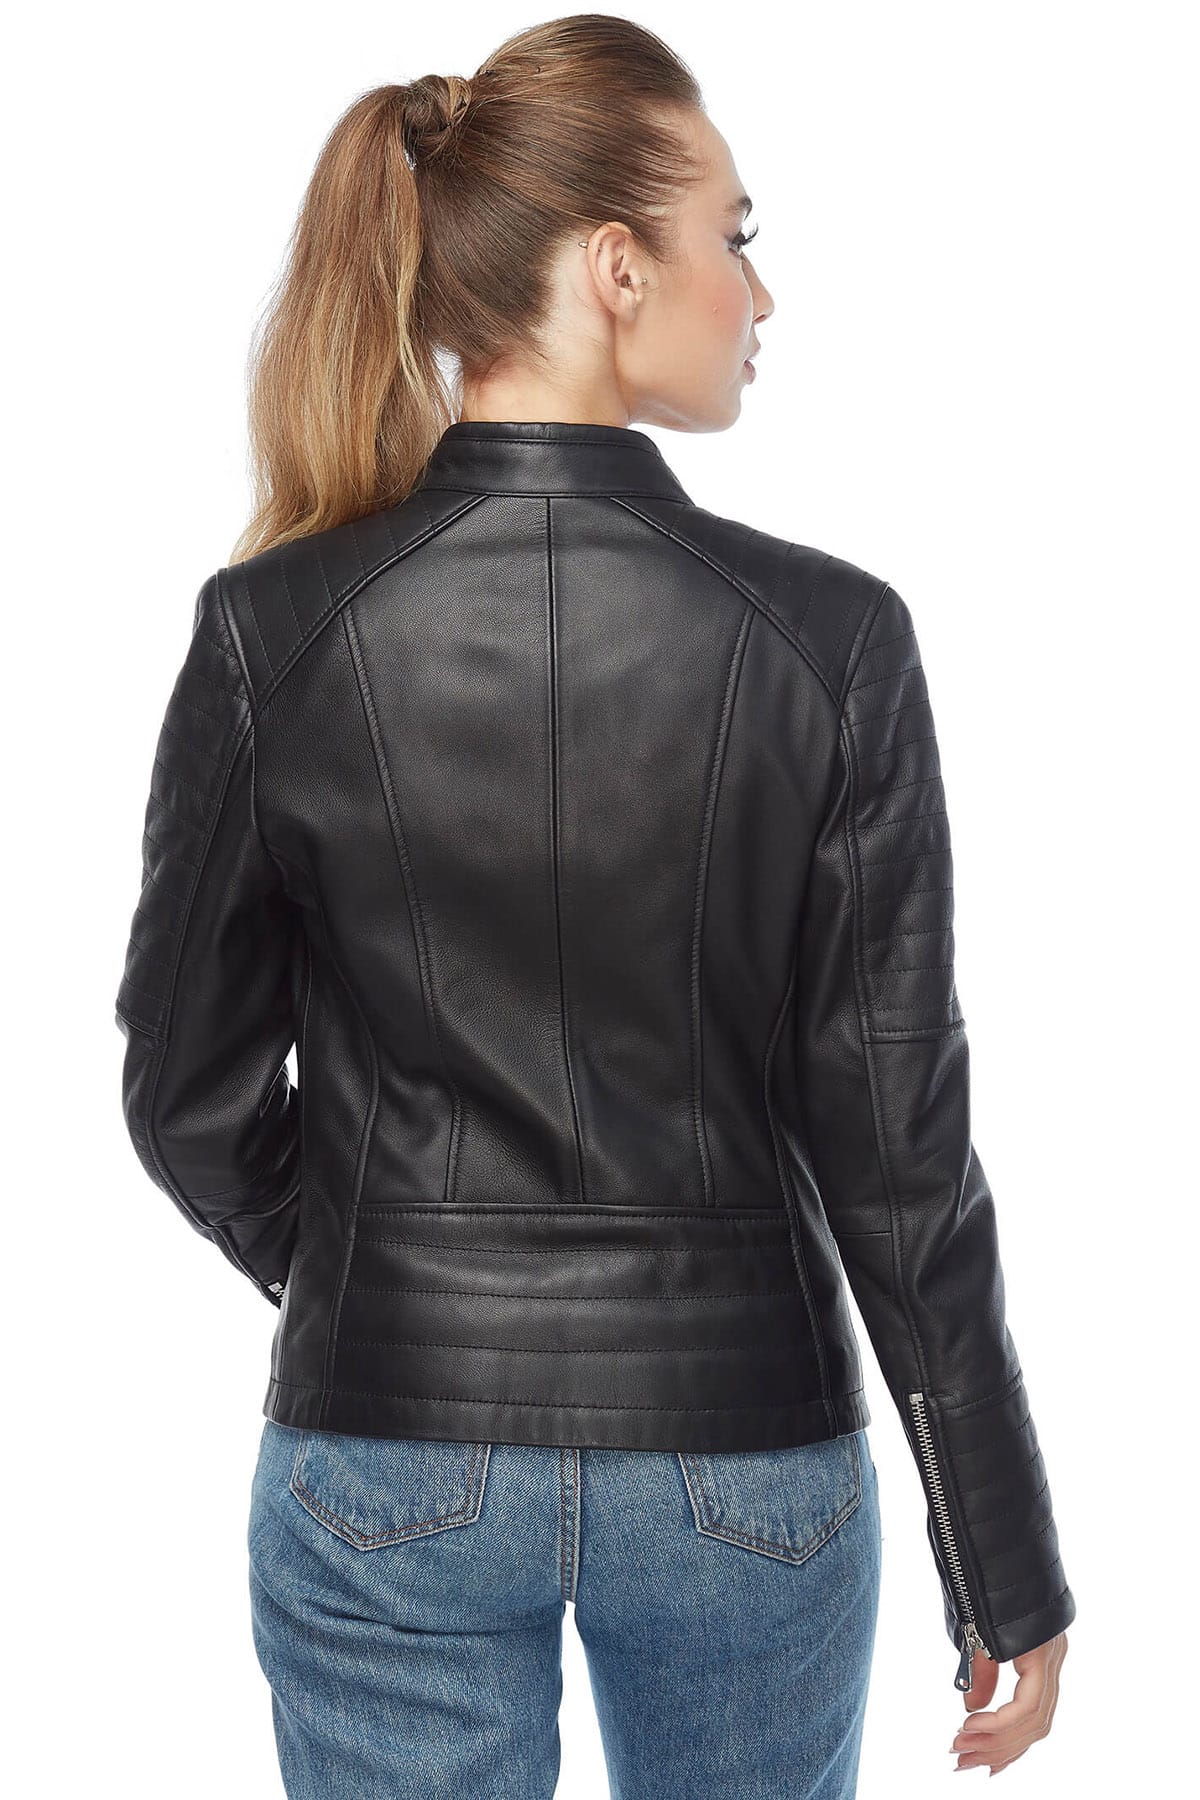 Sarah Archer Women's 100 % Real Black Leather Jacket